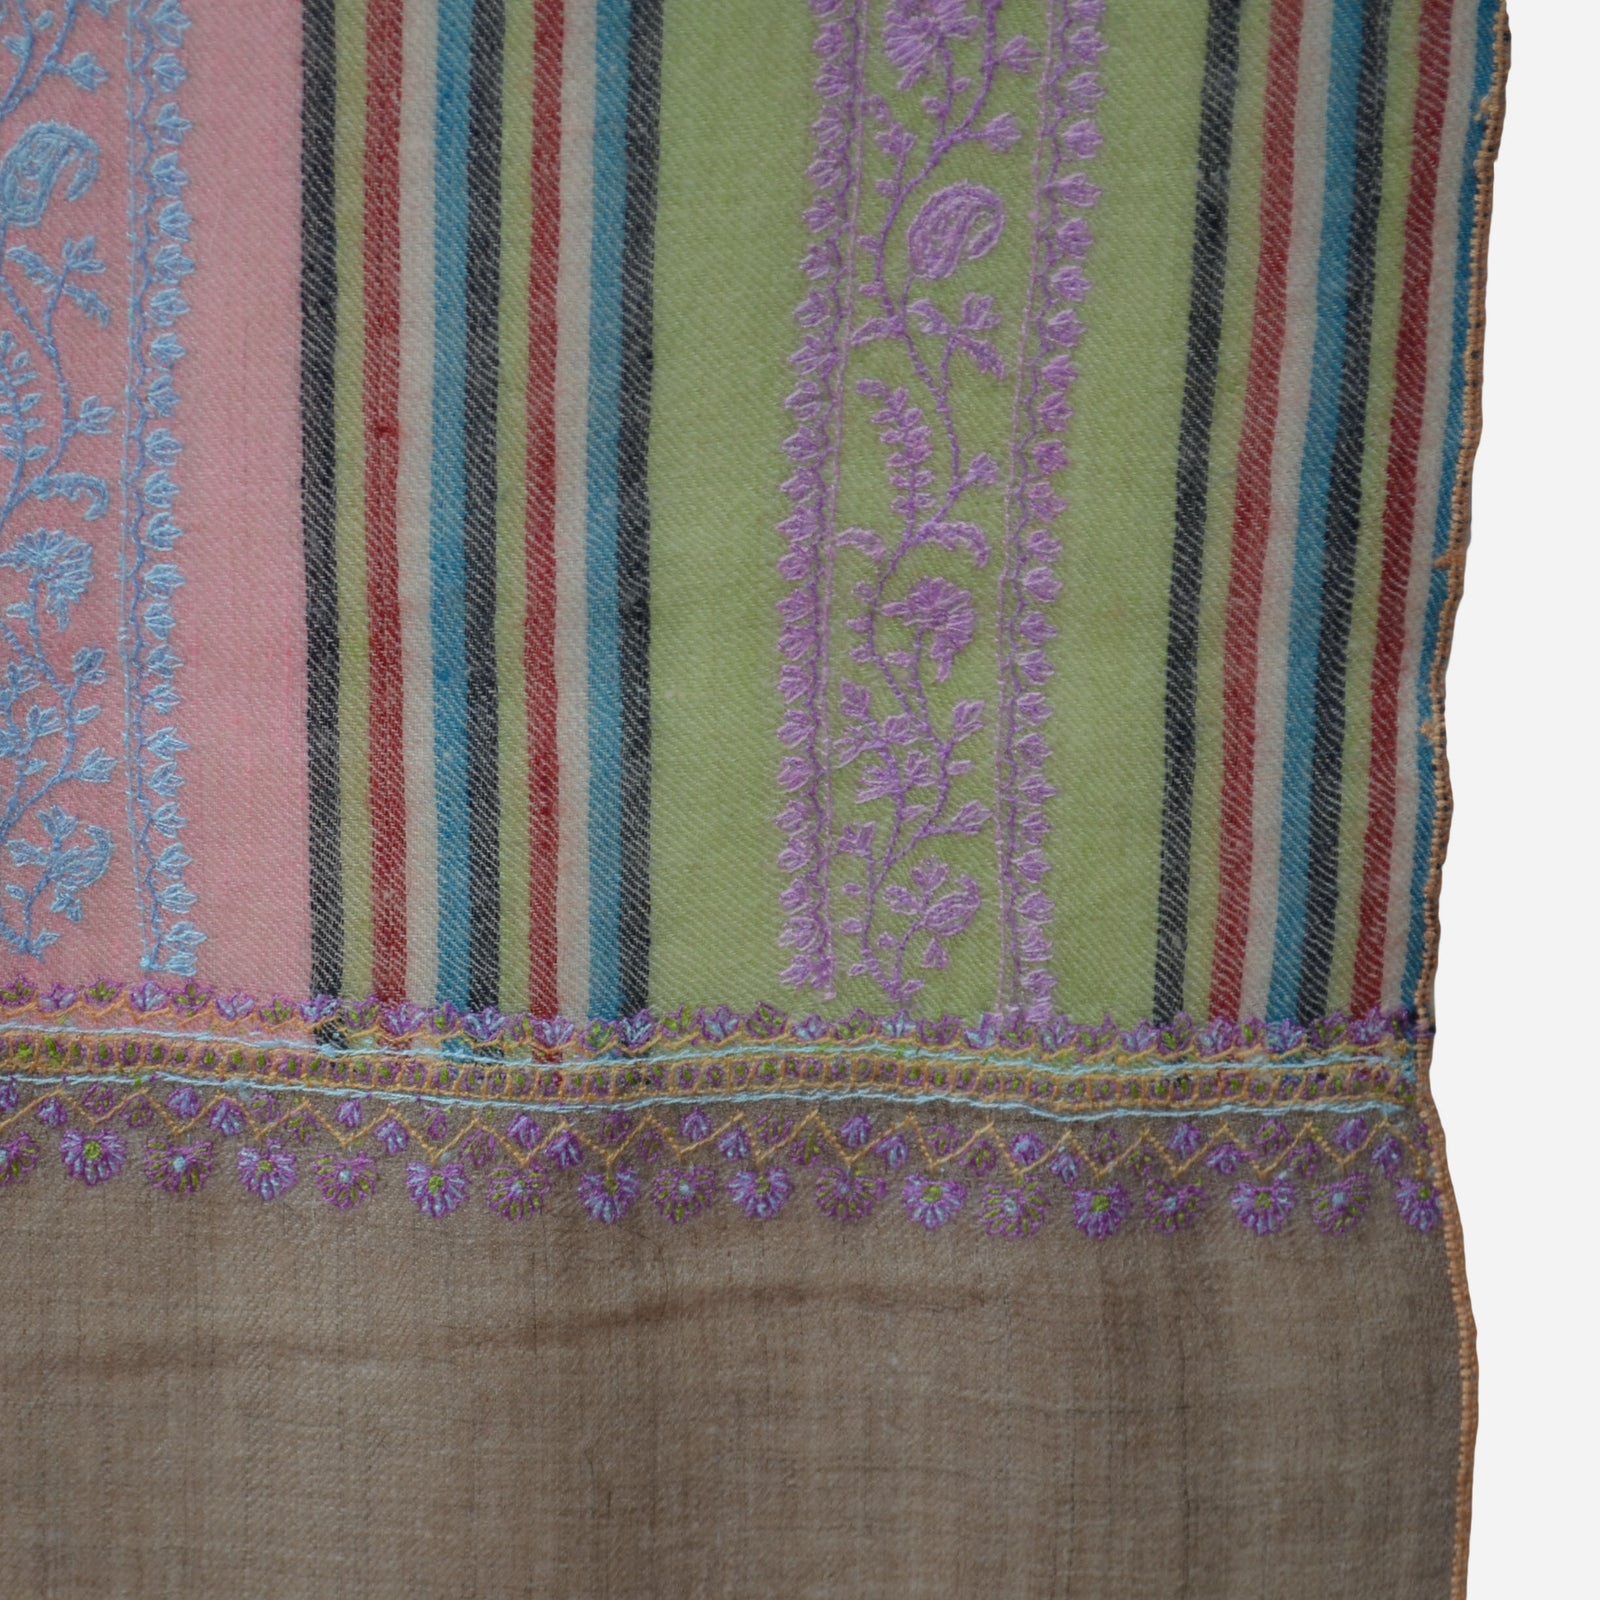 Pashmina embroidered cashmere shawl